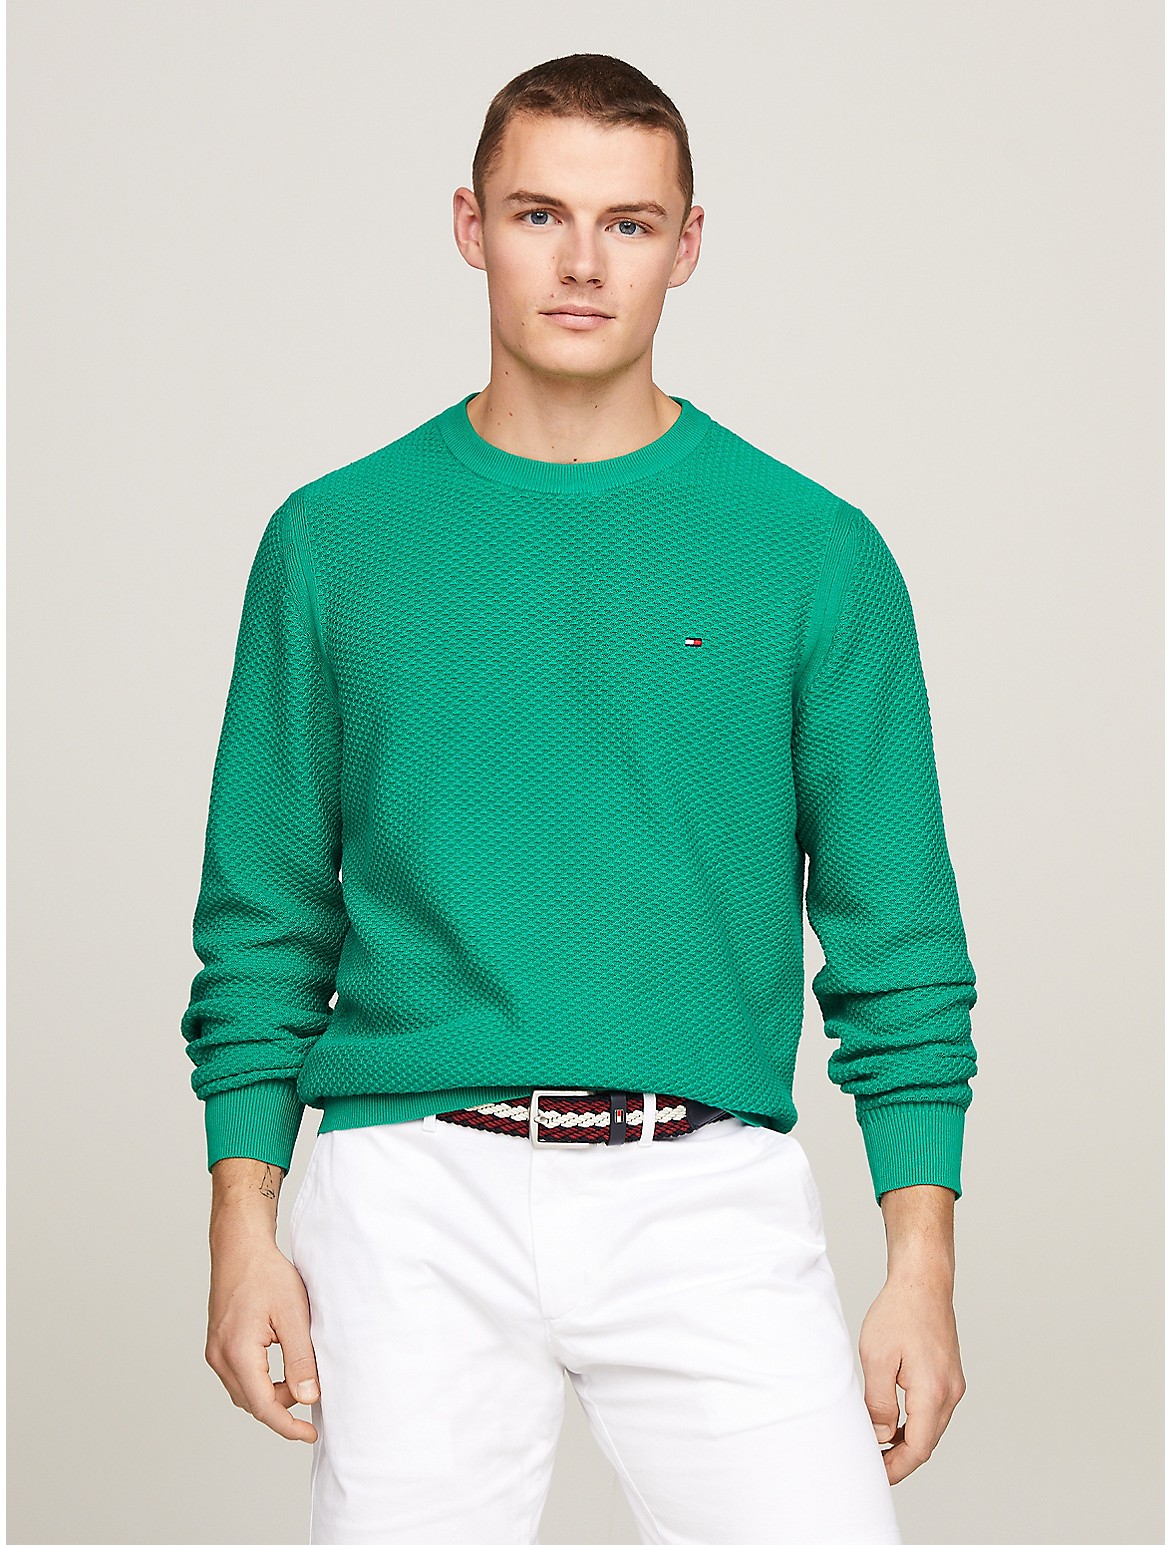 Tommy Hilfiger Men's Textured Knit Crewneck Sweater